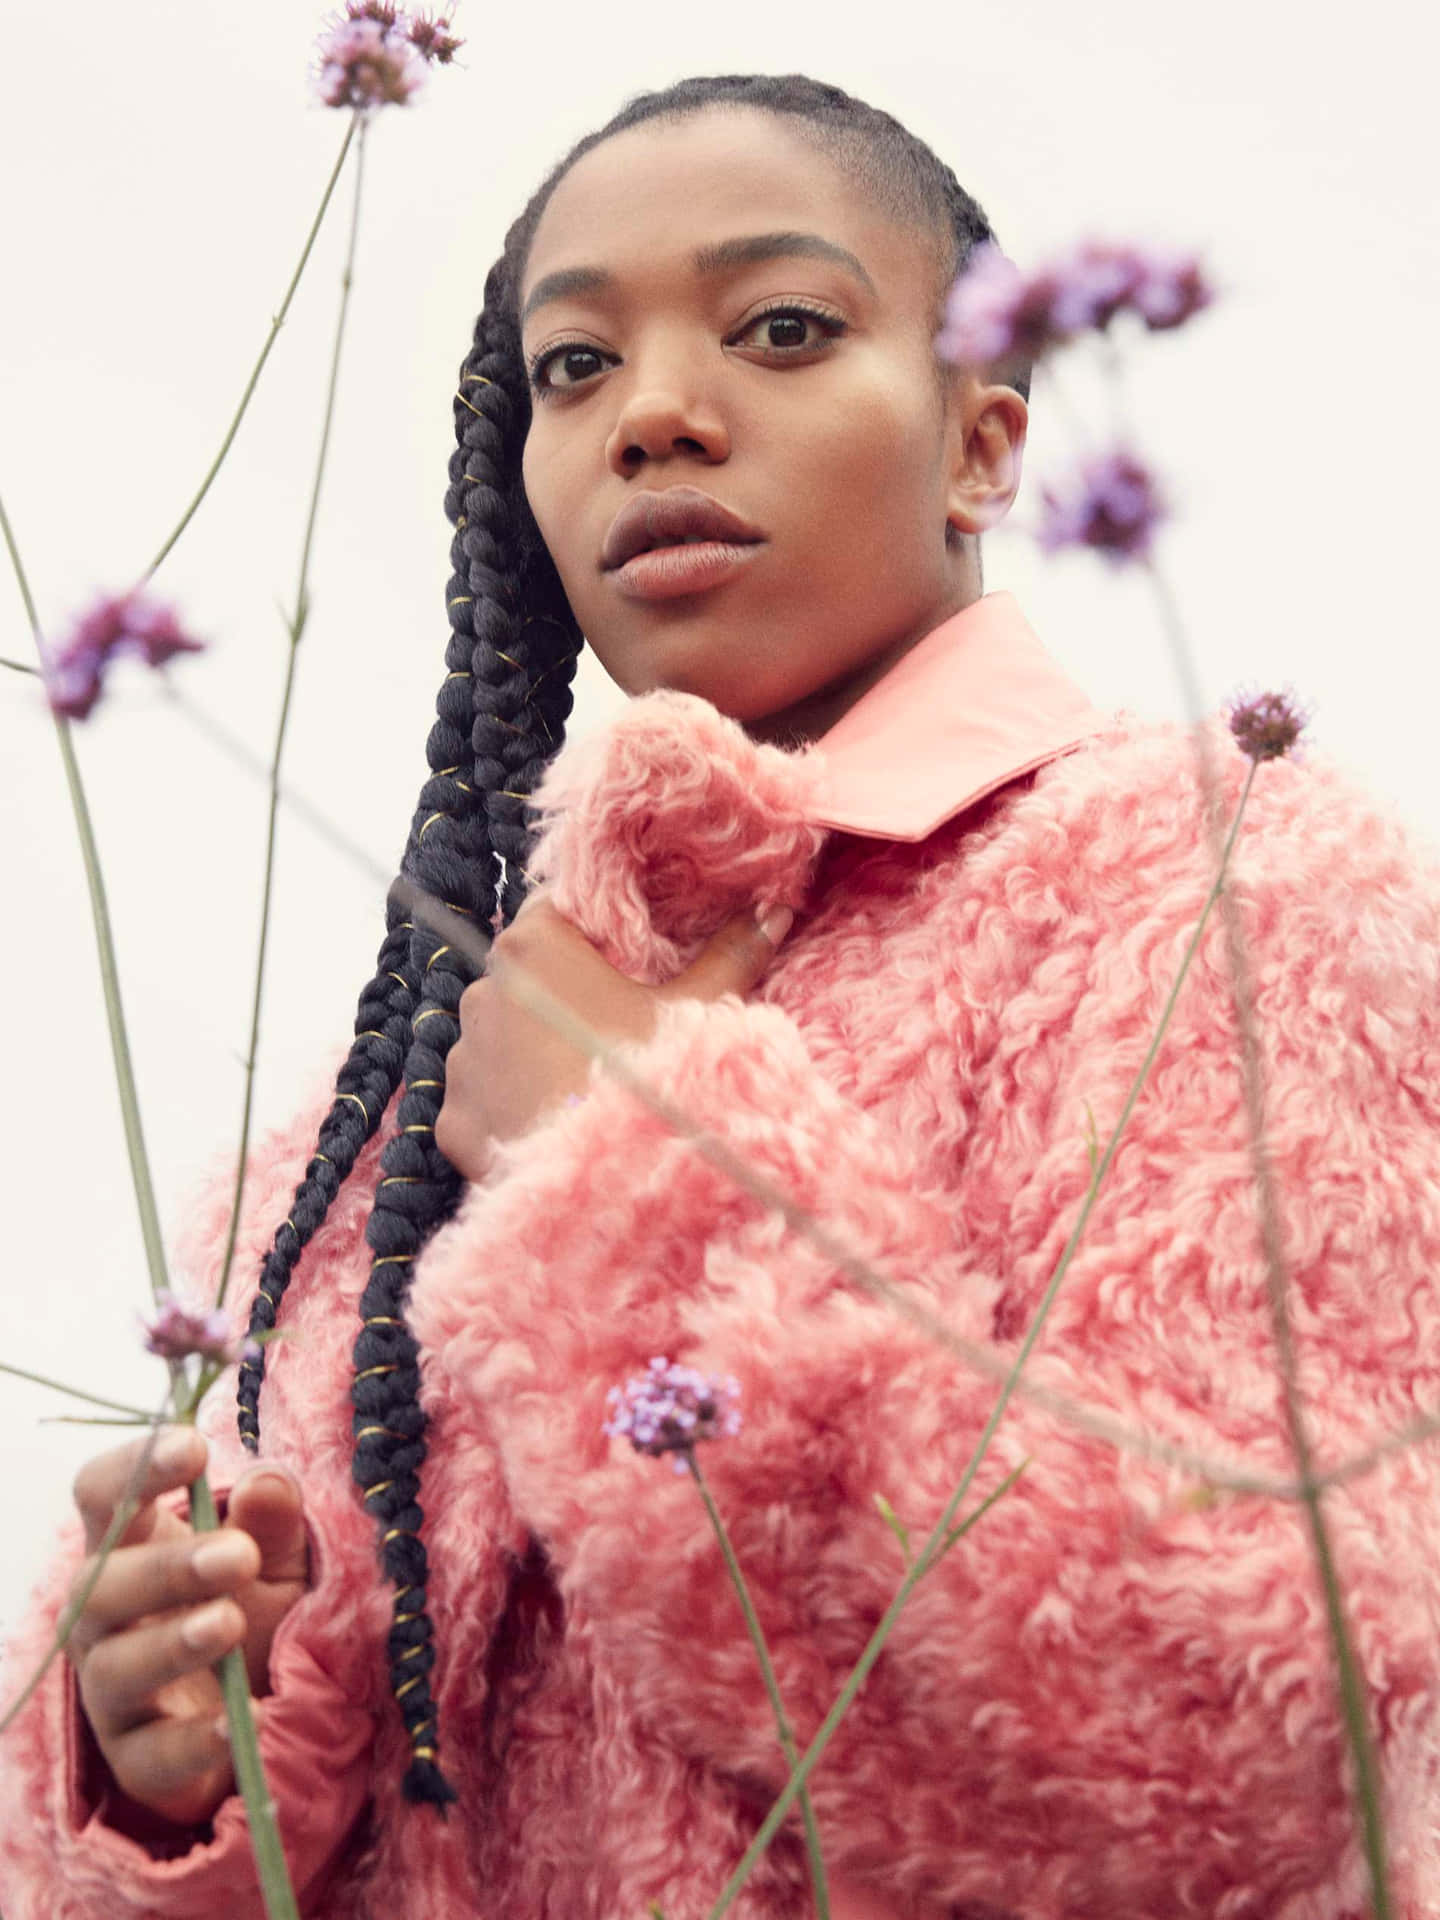 Naomi Ackie Pink Fur Coat Portrait Wallpaper